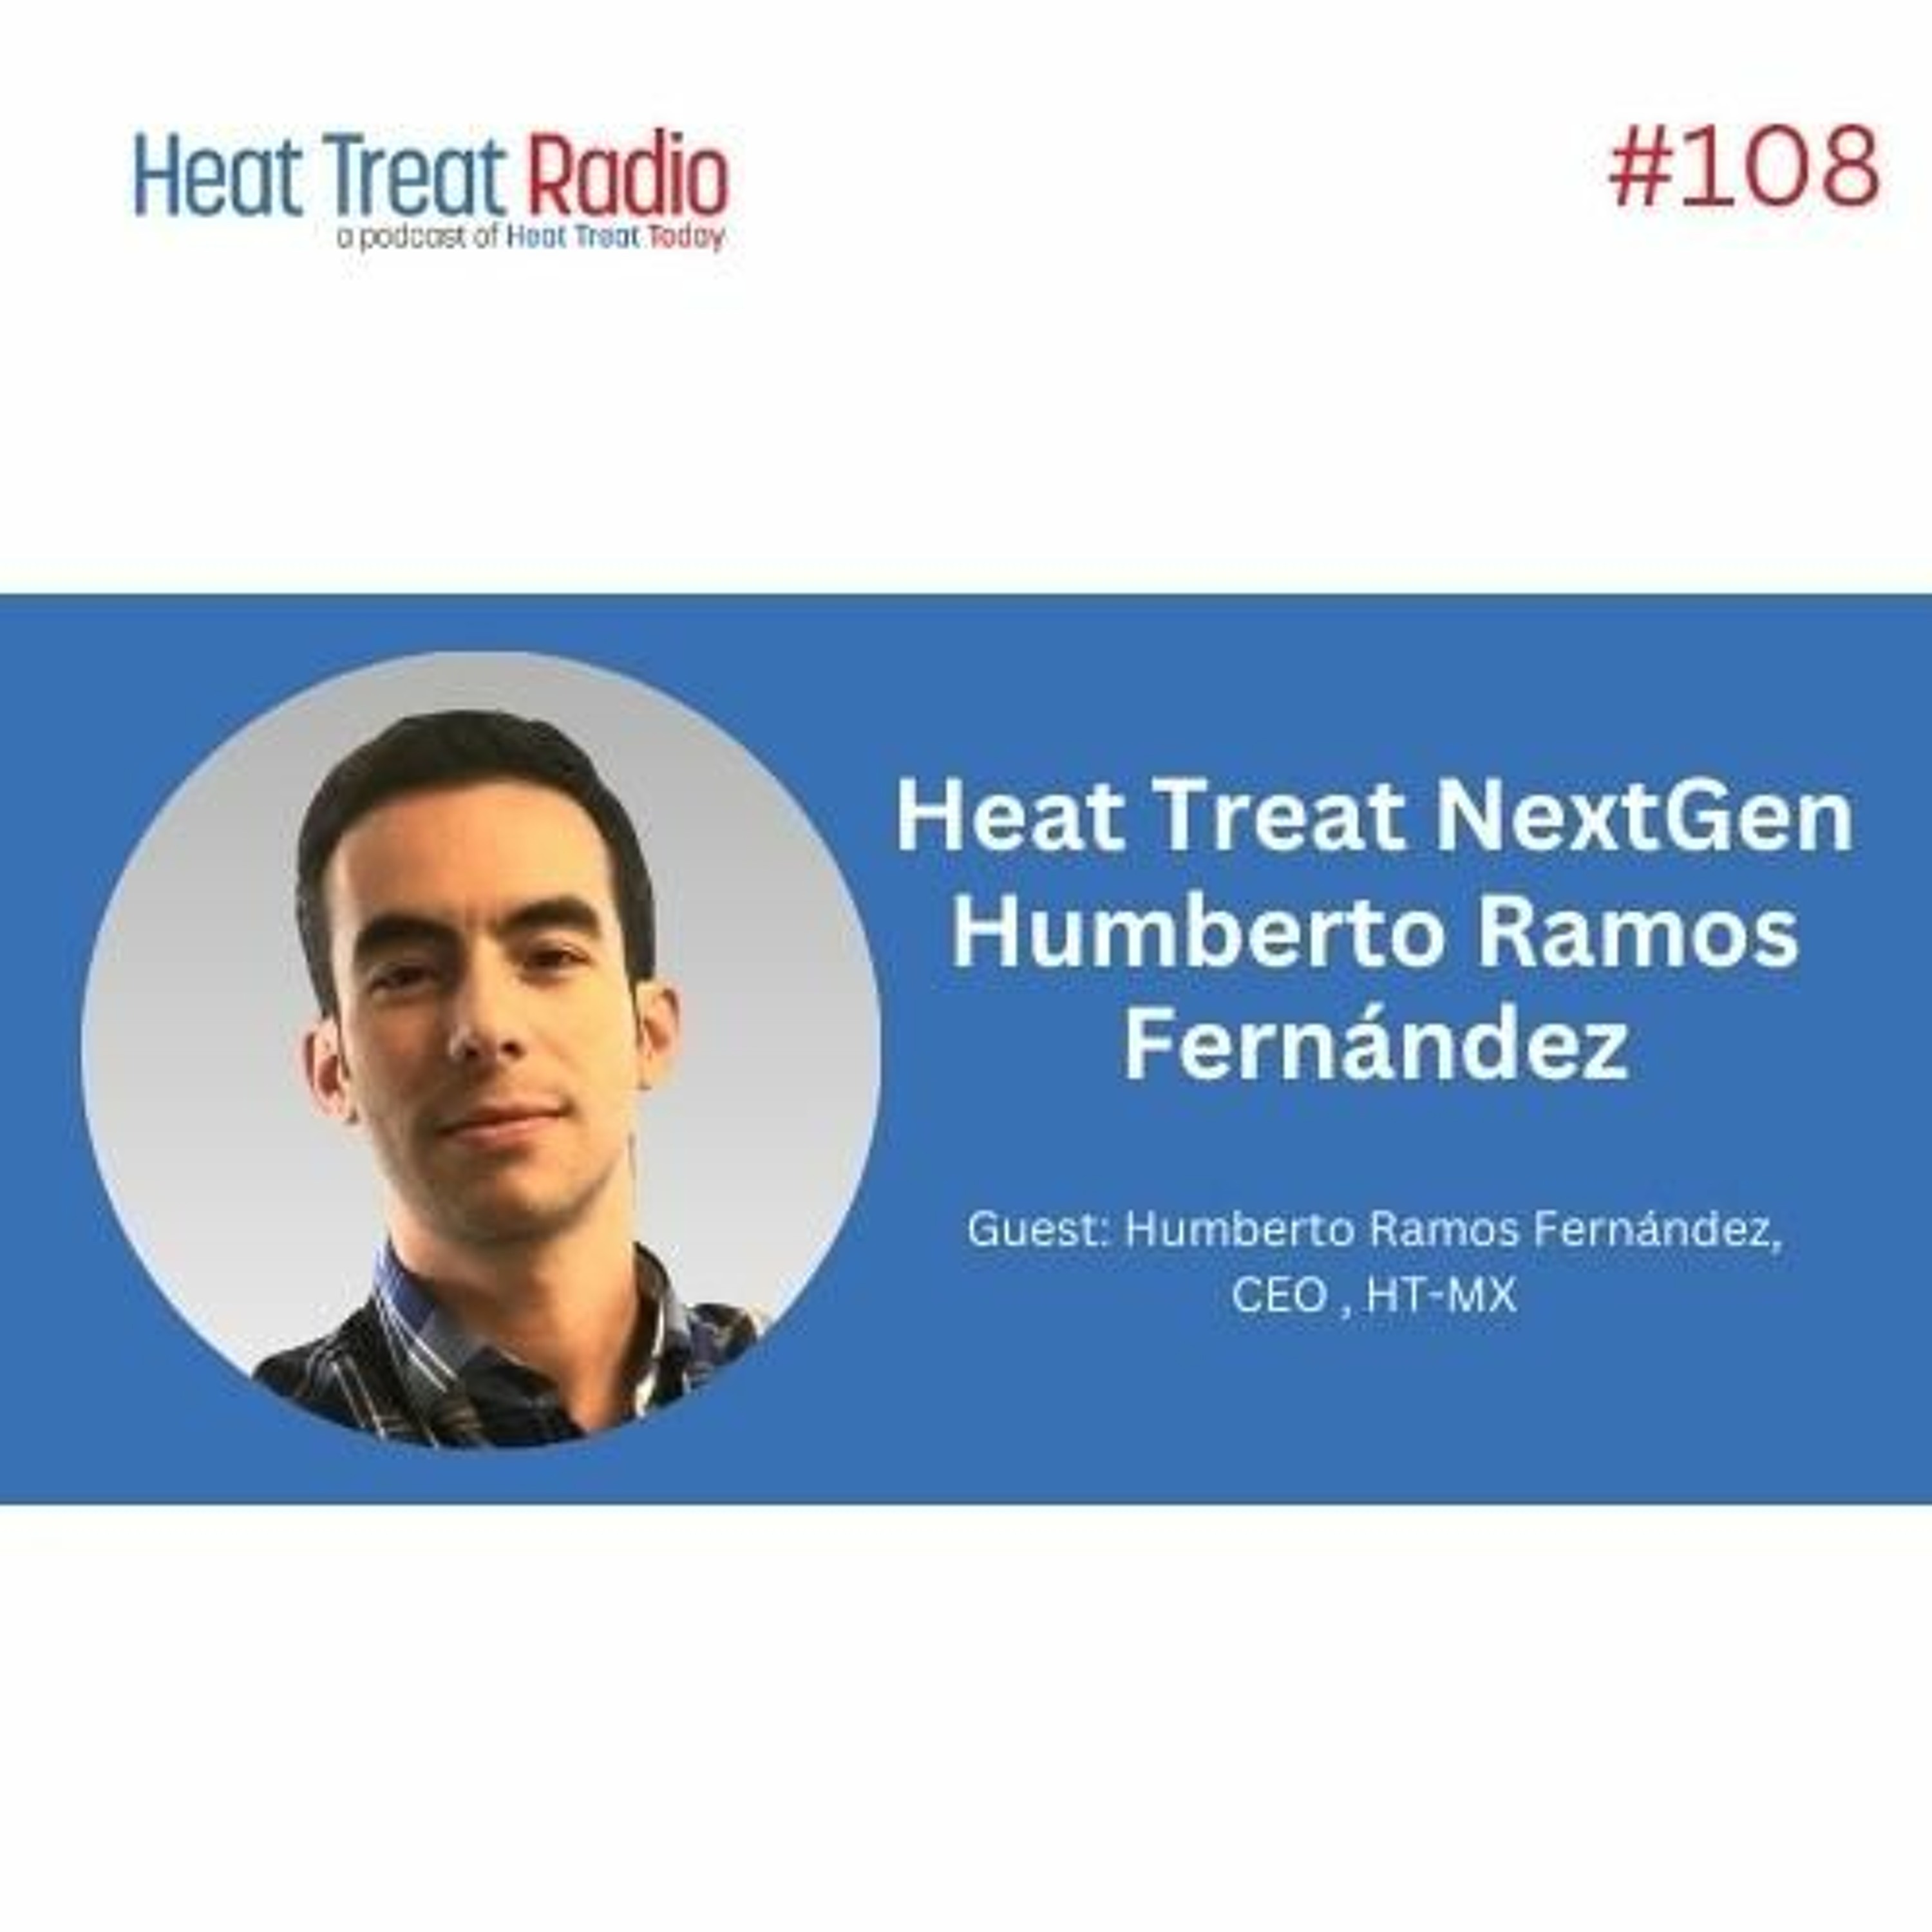 Heat Treat Radio #108: Heat Treat NextGen Humberto Ramos Fernández